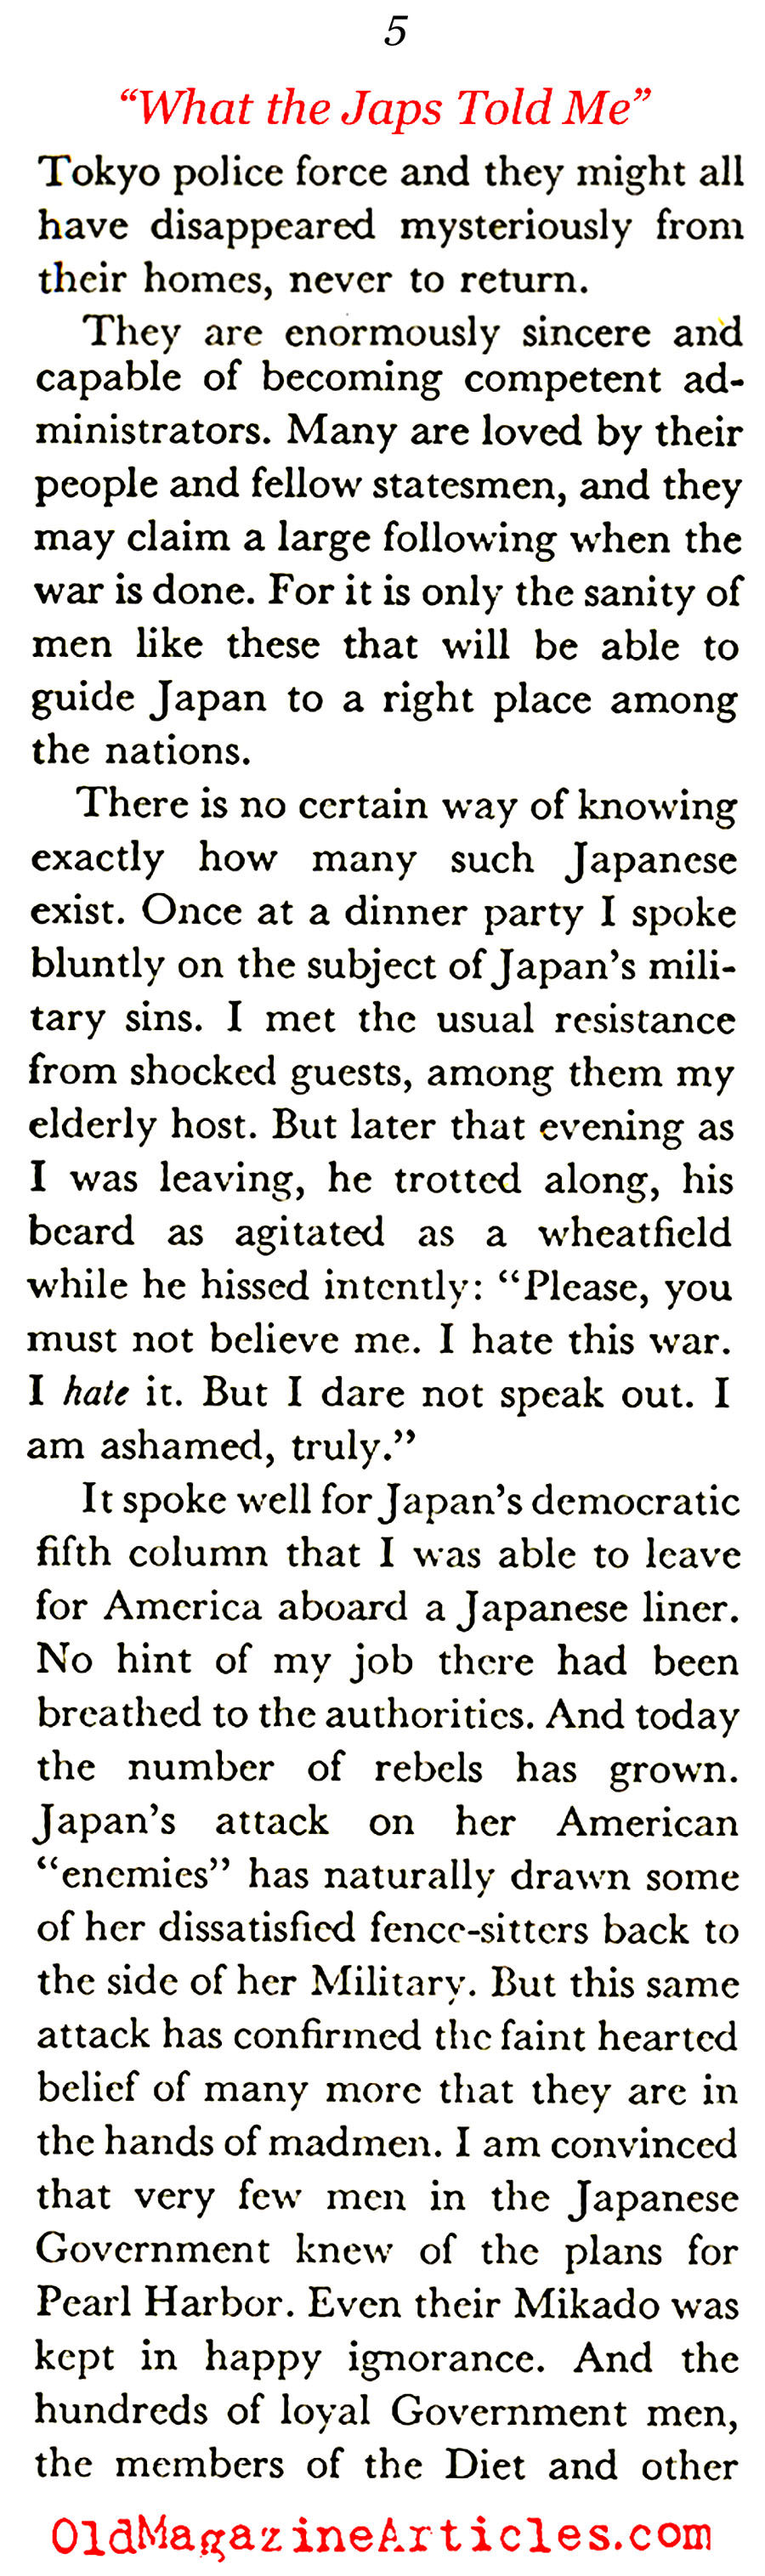 The Japanese Subversives (Coronet Magazine, 1943)